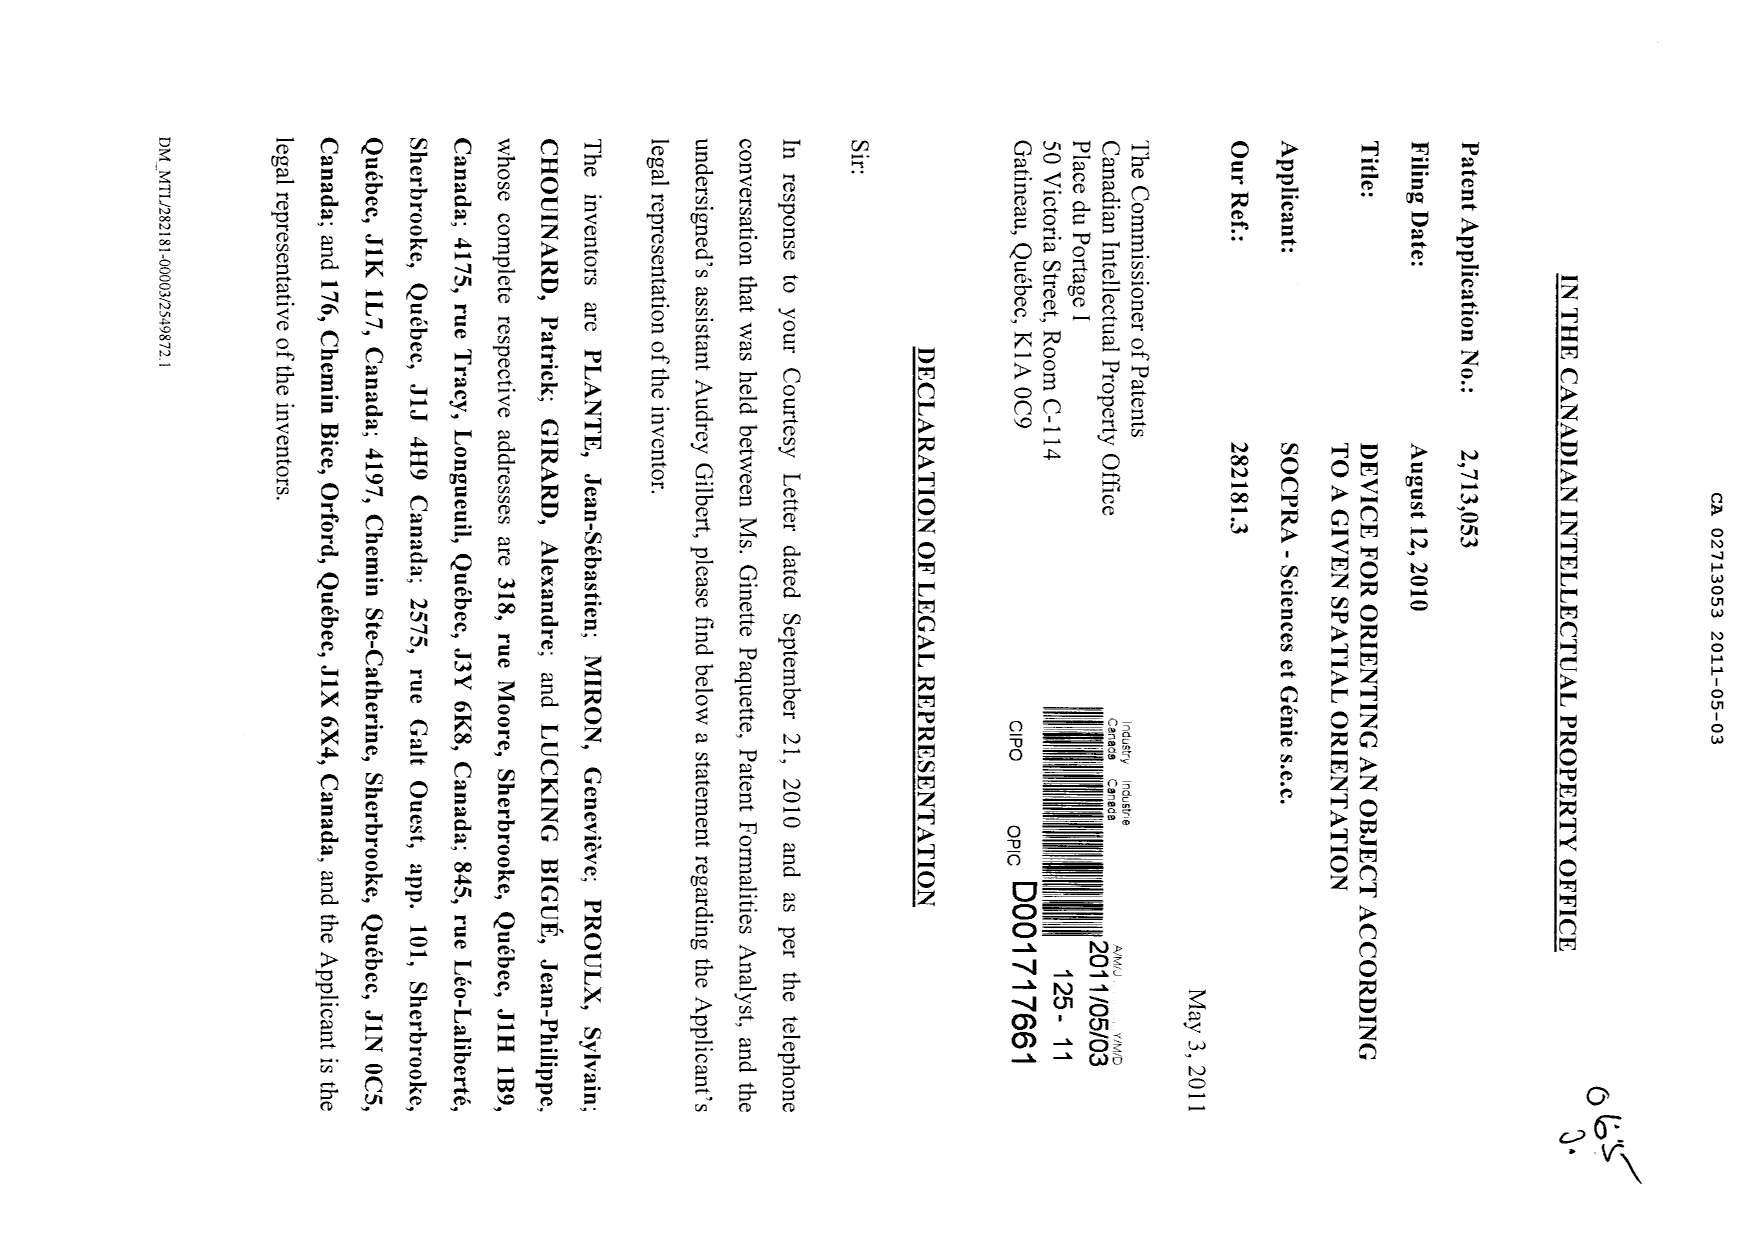 Canadian Patent Document 2713053. Correspondence 20101203. Image 1 of 2